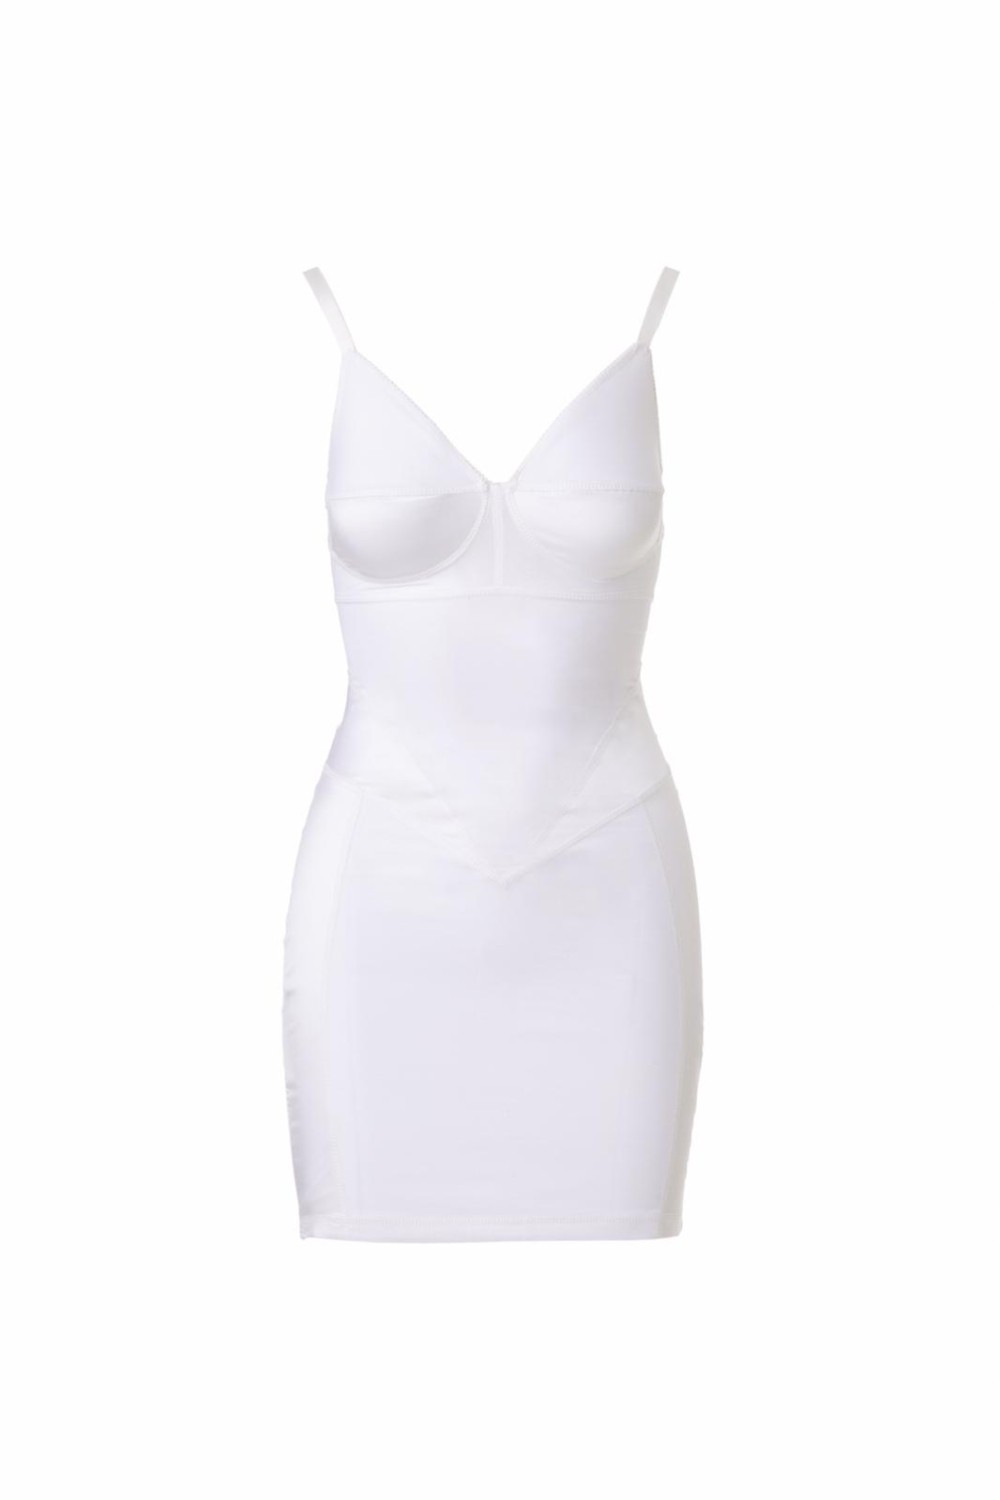 Retro Dress - Cotton Jersey and Silk Satin - White - short